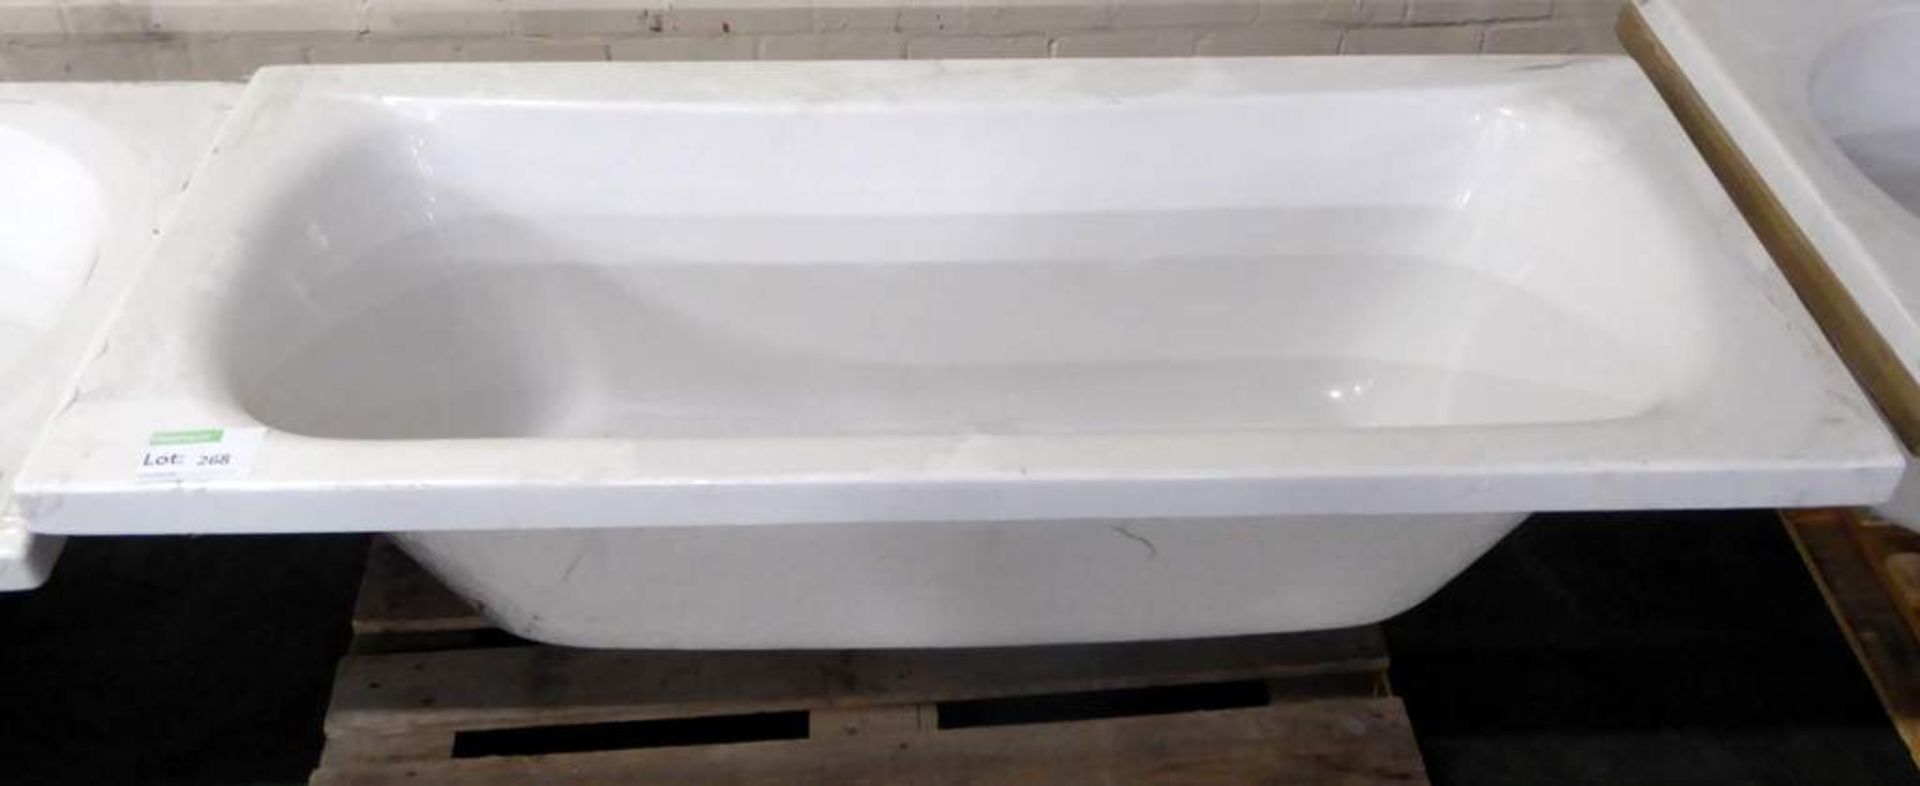 Vitra Nuova bouble end bath 170x75cm